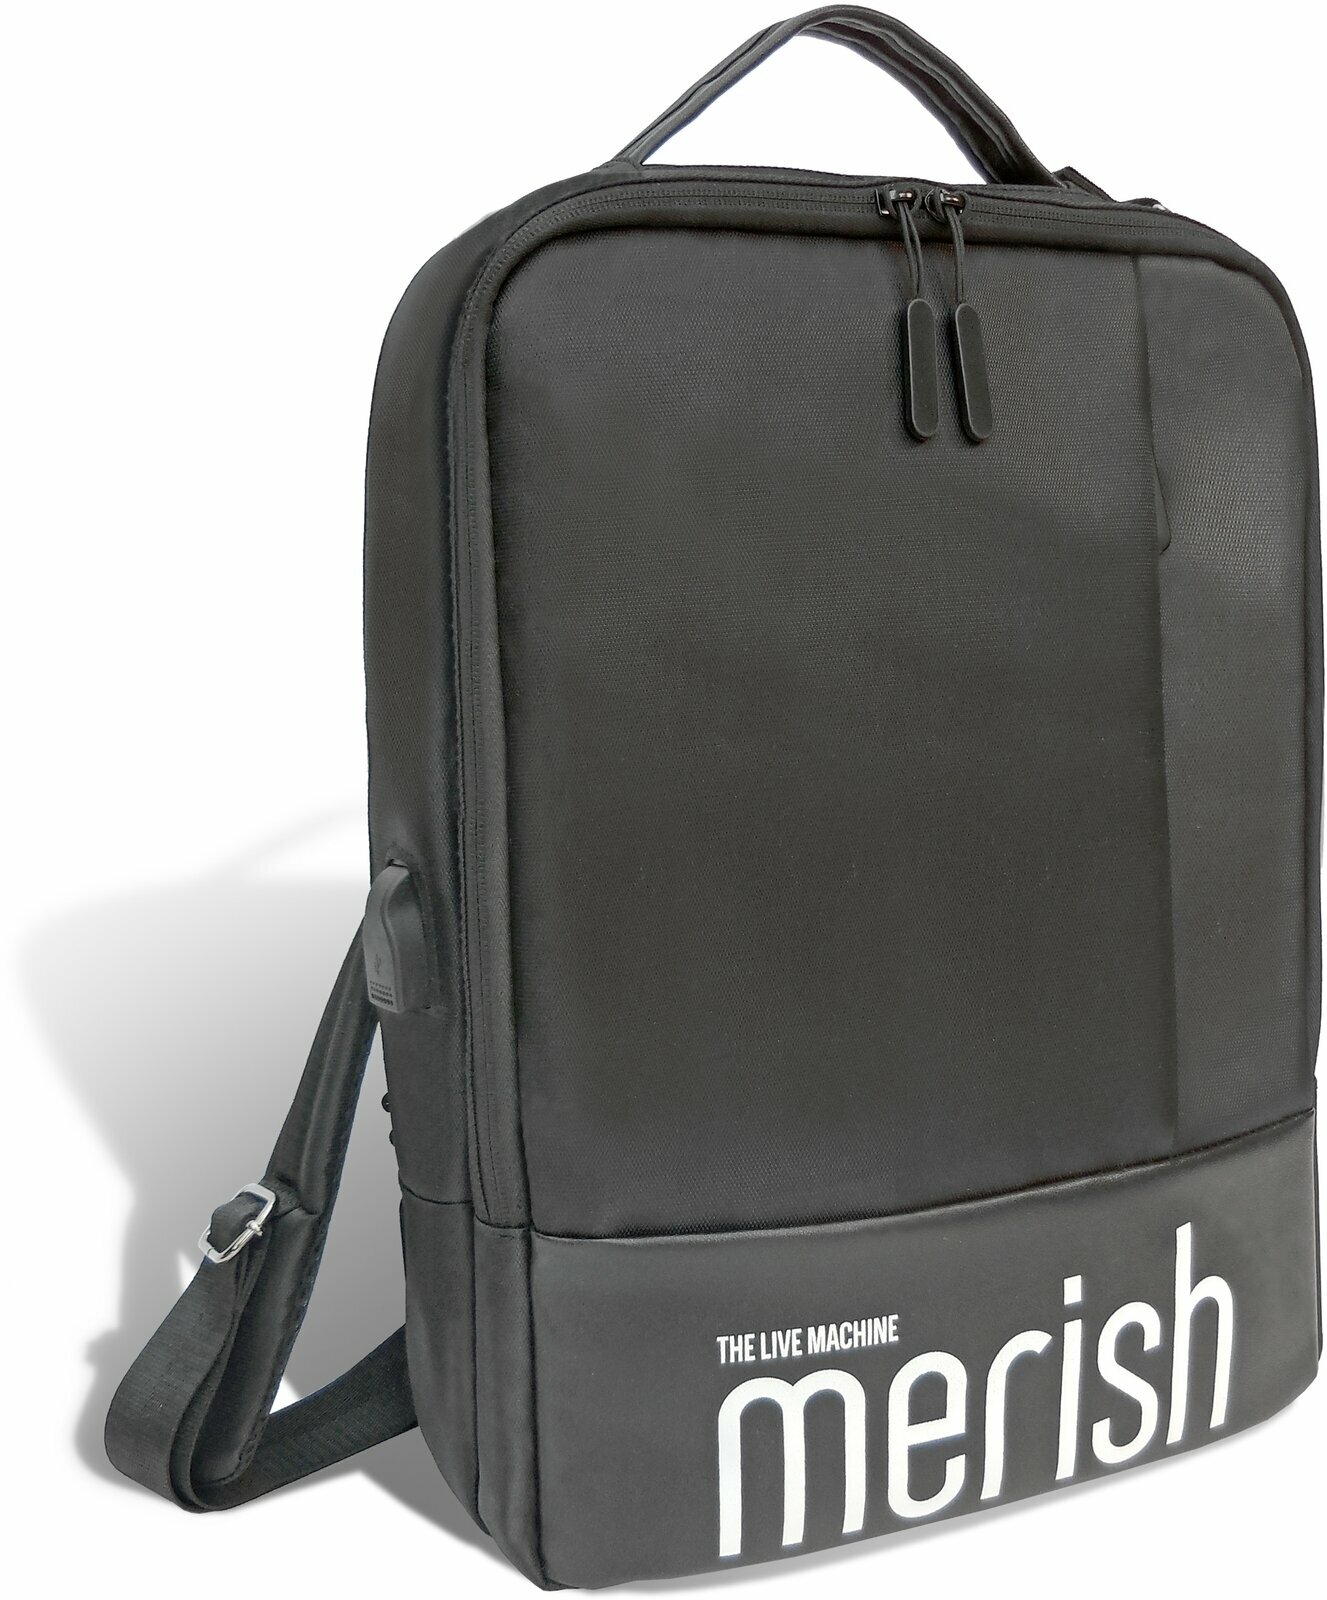 Capa protetora M-Live Merish Soft Bag